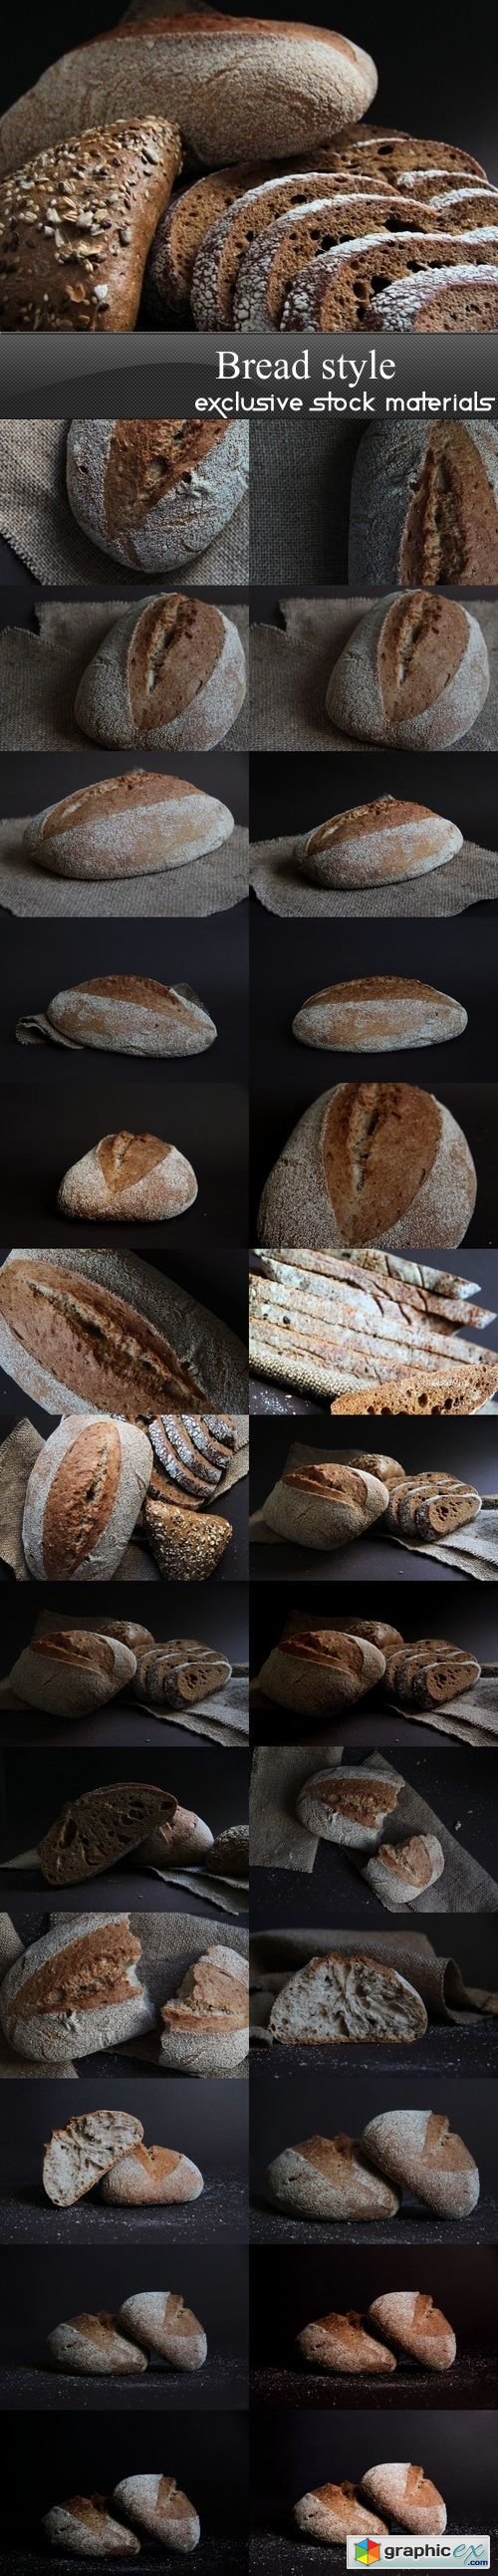 Bread style - 27 UHQ JPEG